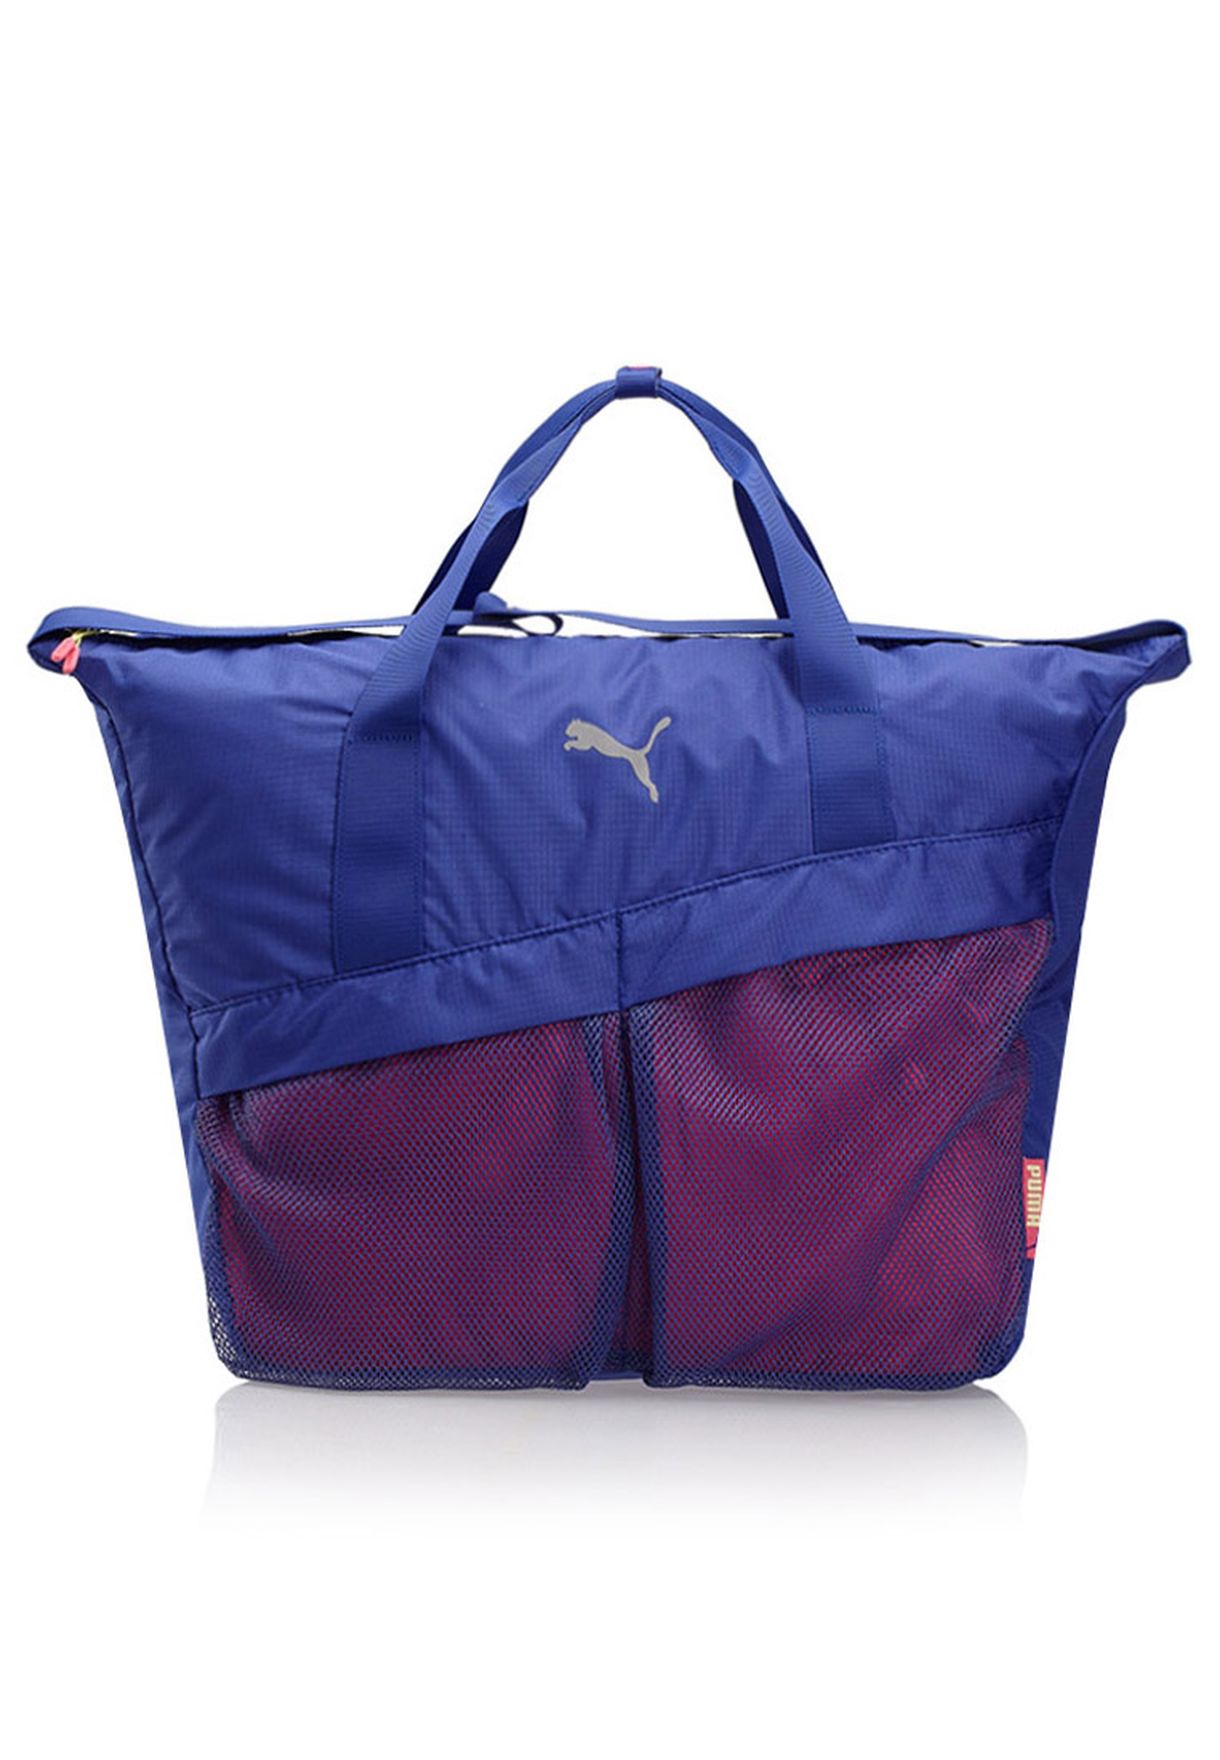 Buy Puma Multicolor Gym Workout Bag for 